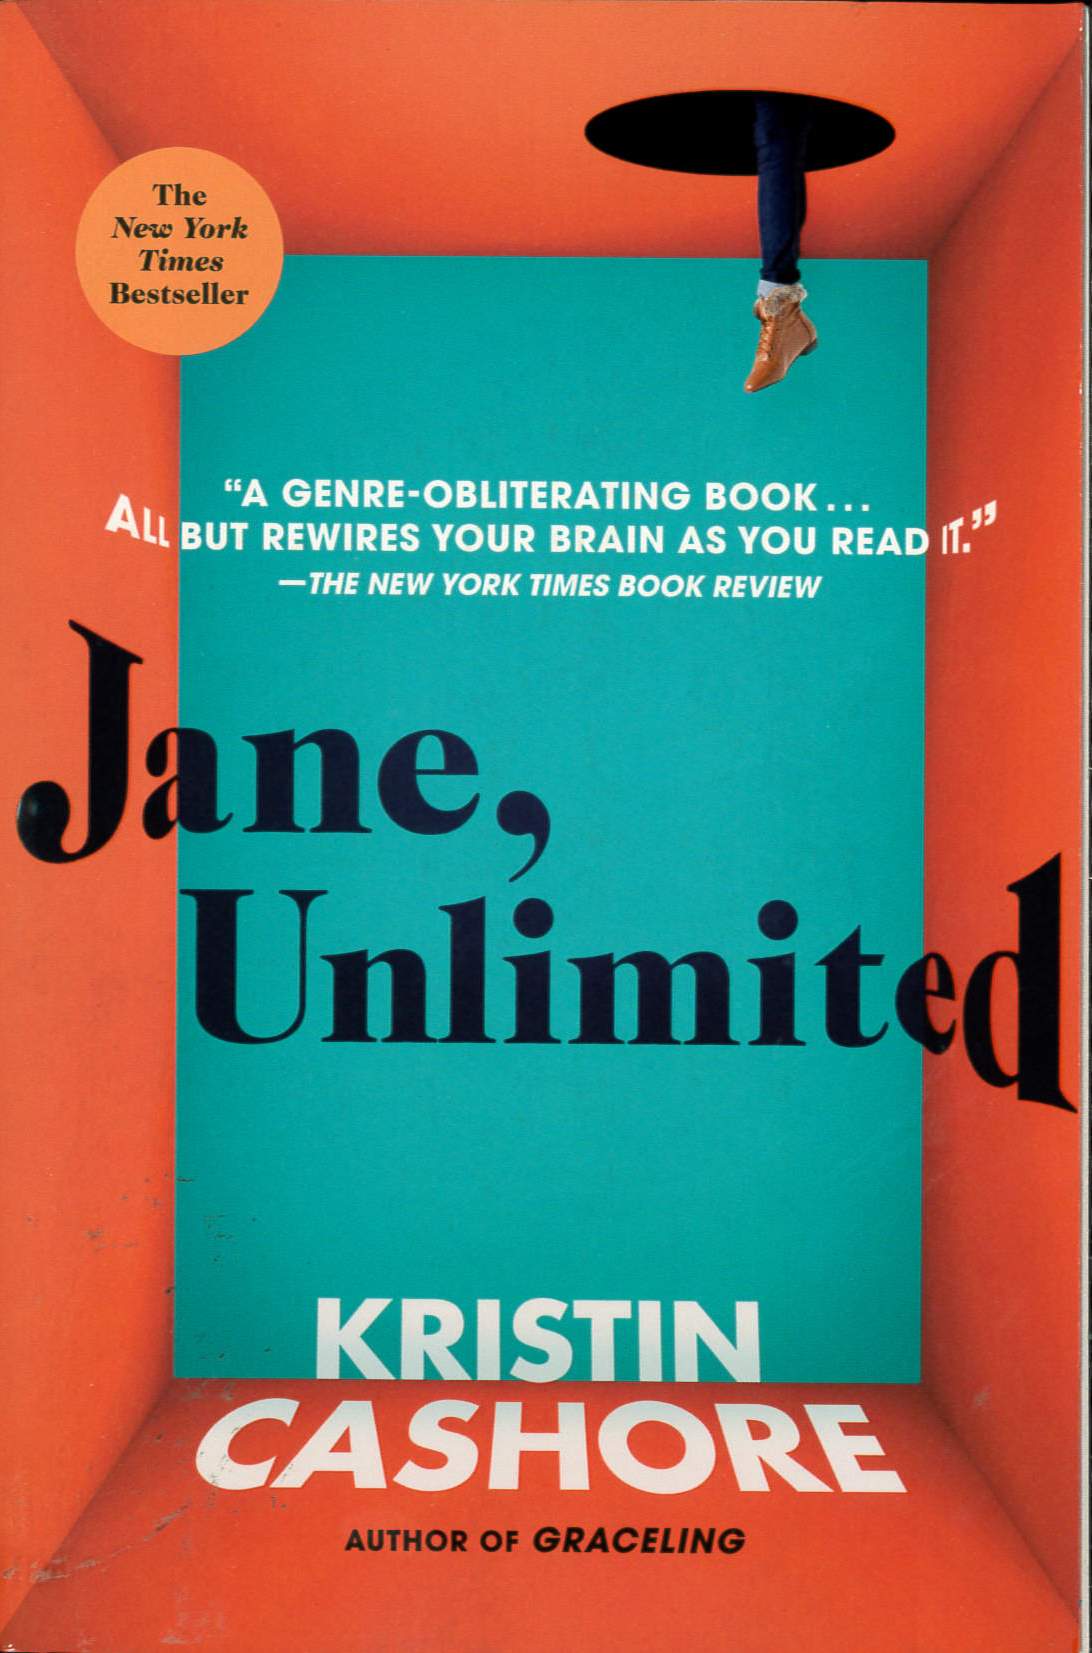 Jane, unlimited /